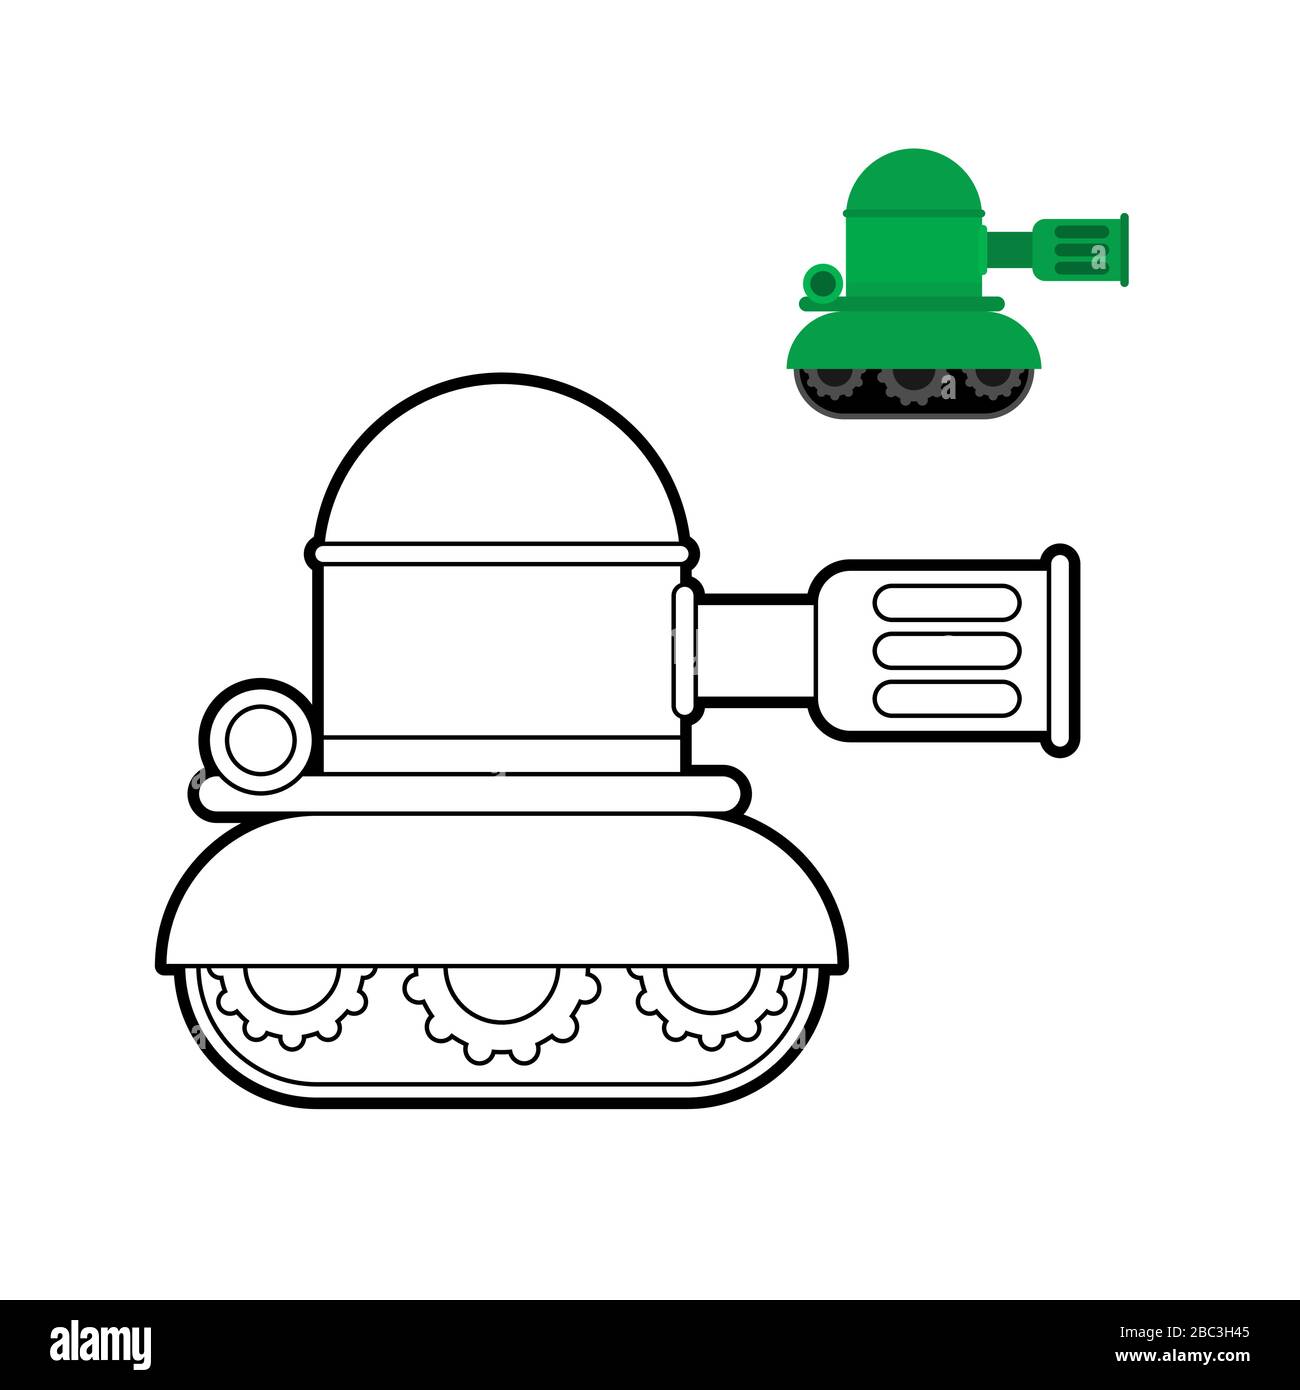 Tank coloring book. Cartoon War machine toy line style Stock Vector Image &  Art - Alamy